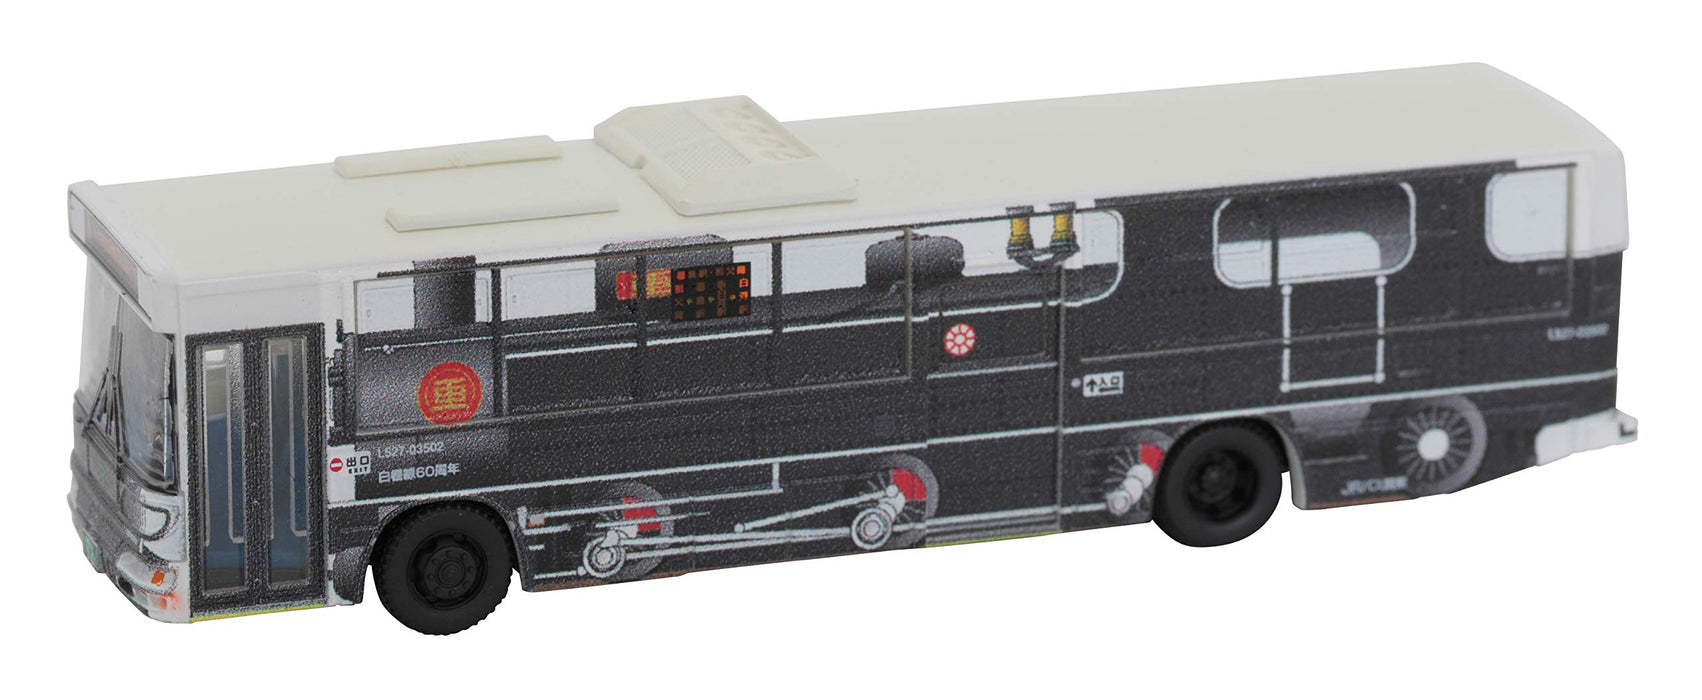 Tomytec 60th Anniversary Jr Bus Kanto Shiratana Line Limited Edition Bus Diorama Set